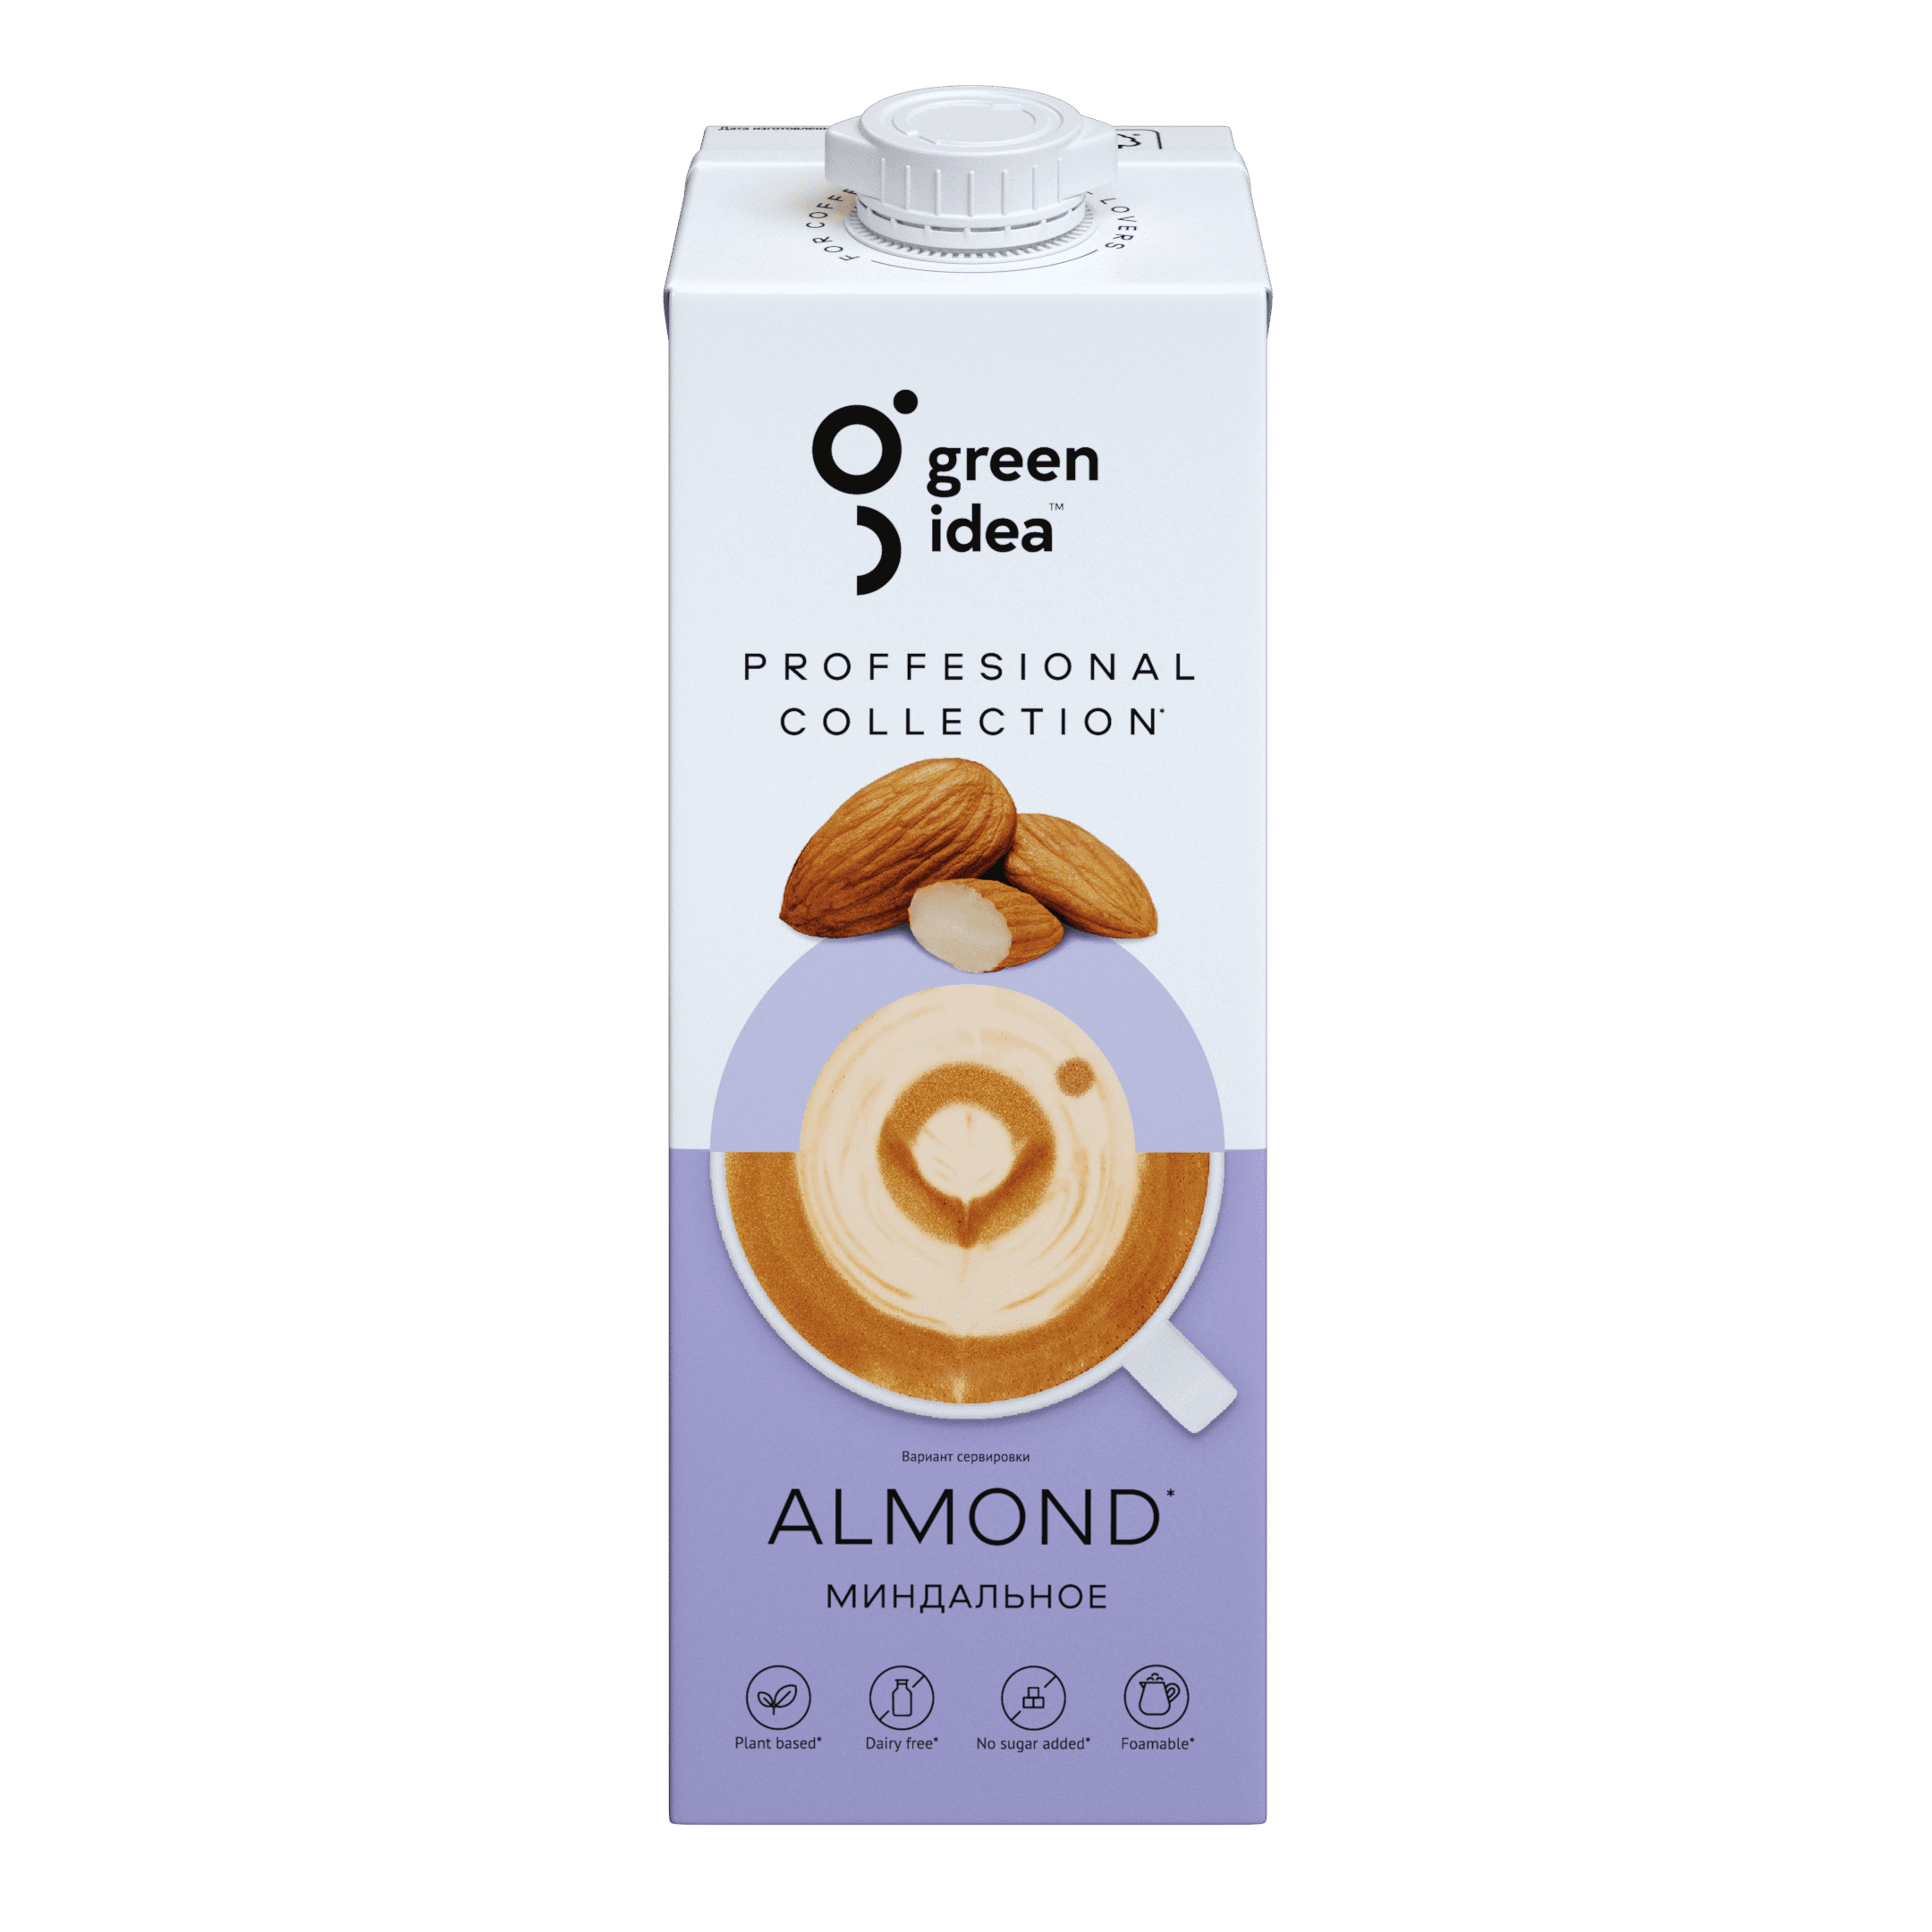 Almond Green Idea Beverage